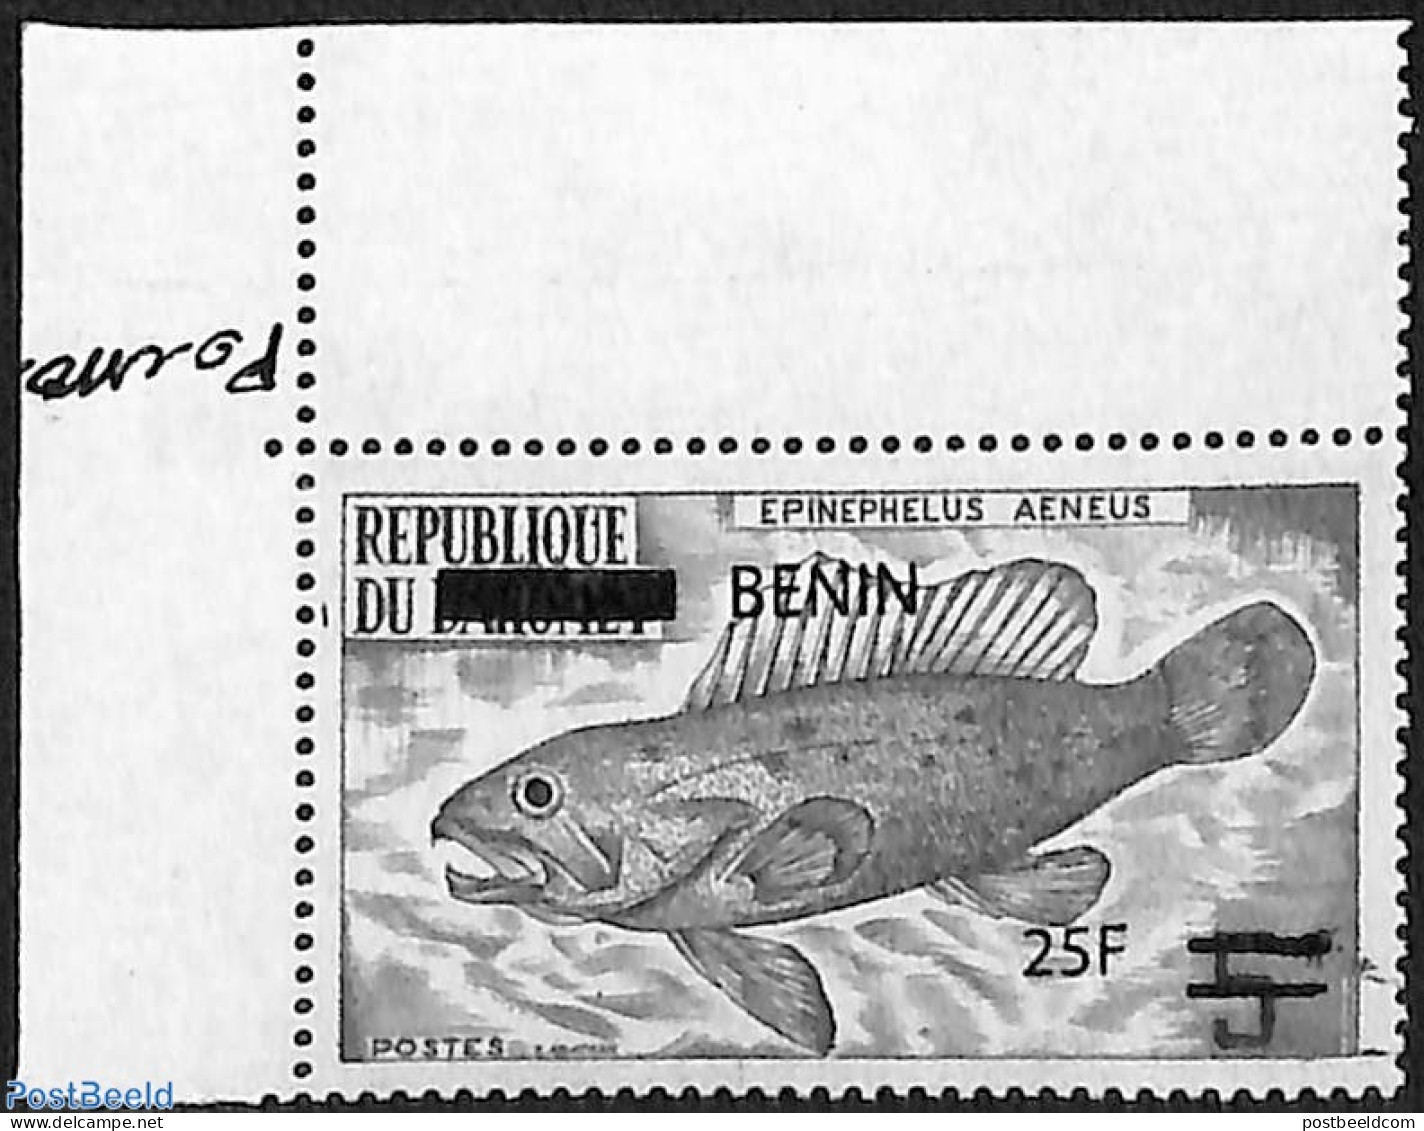 Benin 2007 Epinephelus Aeneus, Fish, Rare, Overprint, Mint NH, Nature - Various - Fish - Errors, Misprints, Plate Flaws - Nuevos